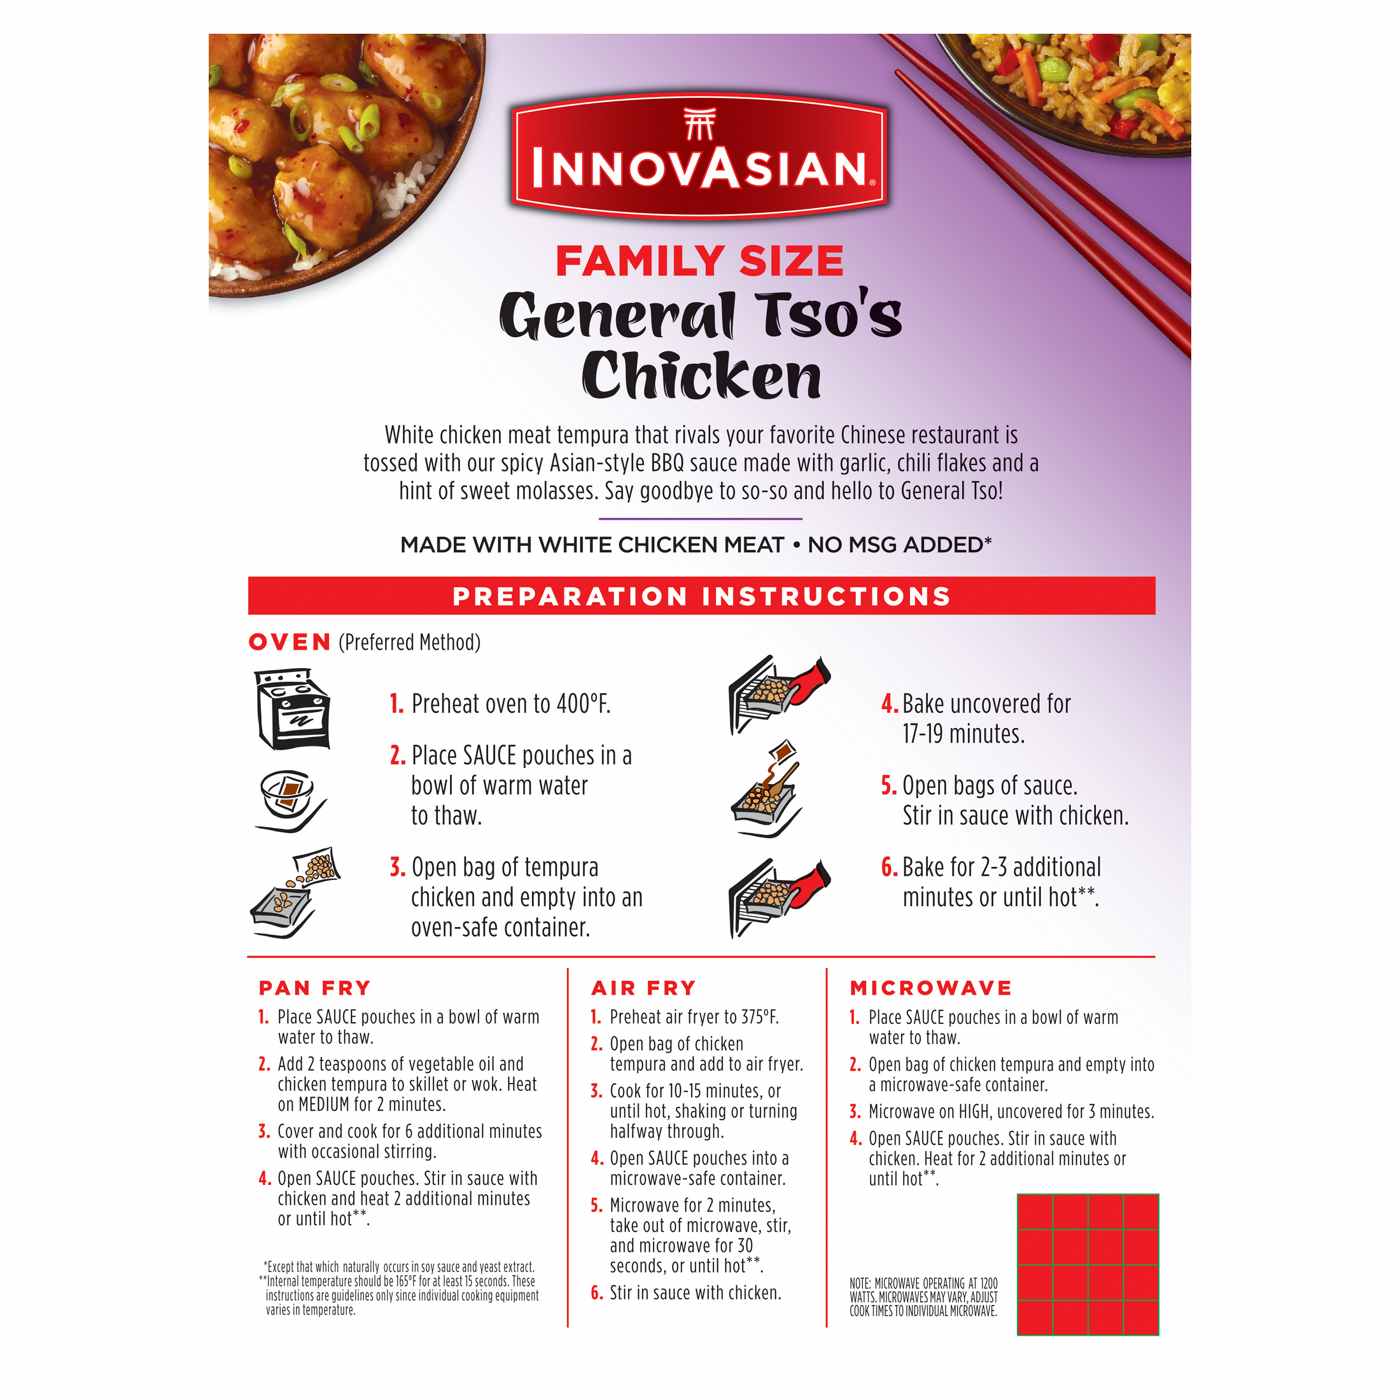 InnovAsian Frozen General Tso's Chicken - Family-Size; image 3 of 7